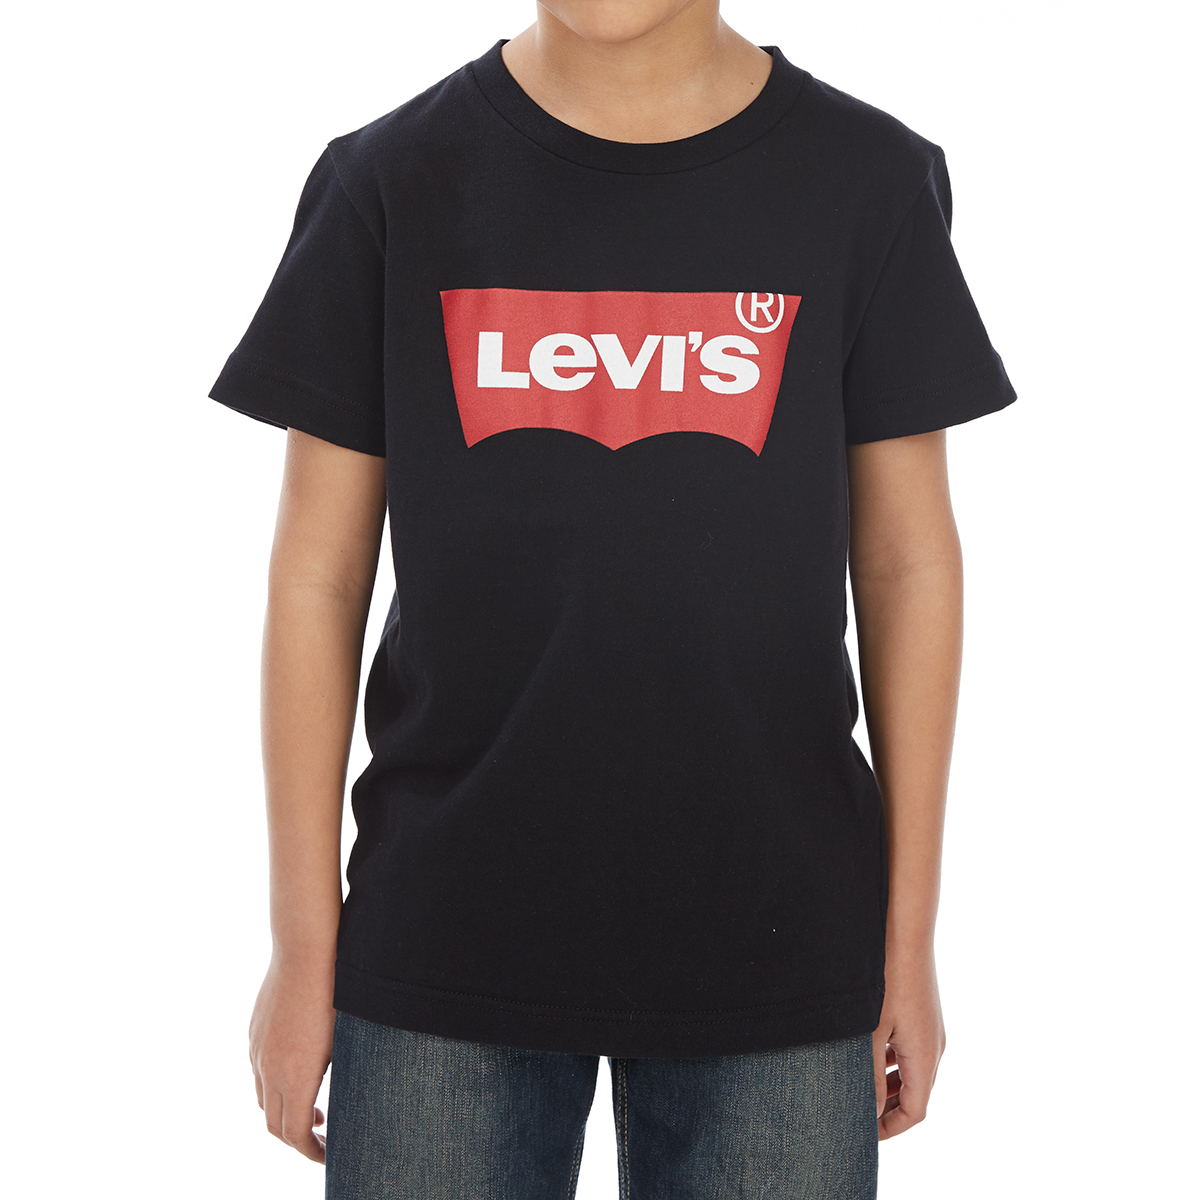 Levi's Big Boys' Batwing Short-Sleeve Tee - Black, S